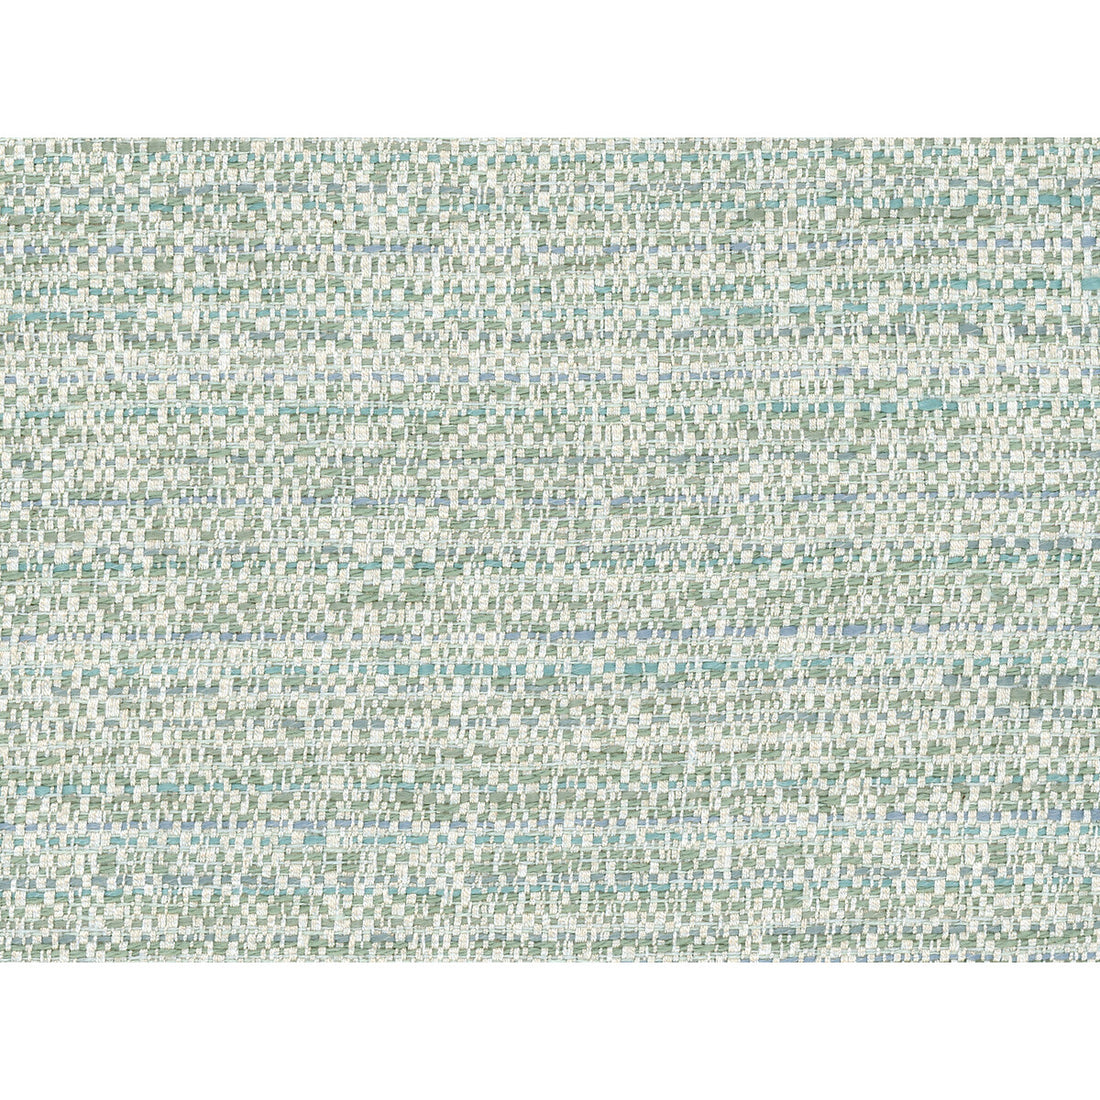 Kravet Smart fabric in 34302-523 color - pattern 34302.523.0 - by Kravet Smart